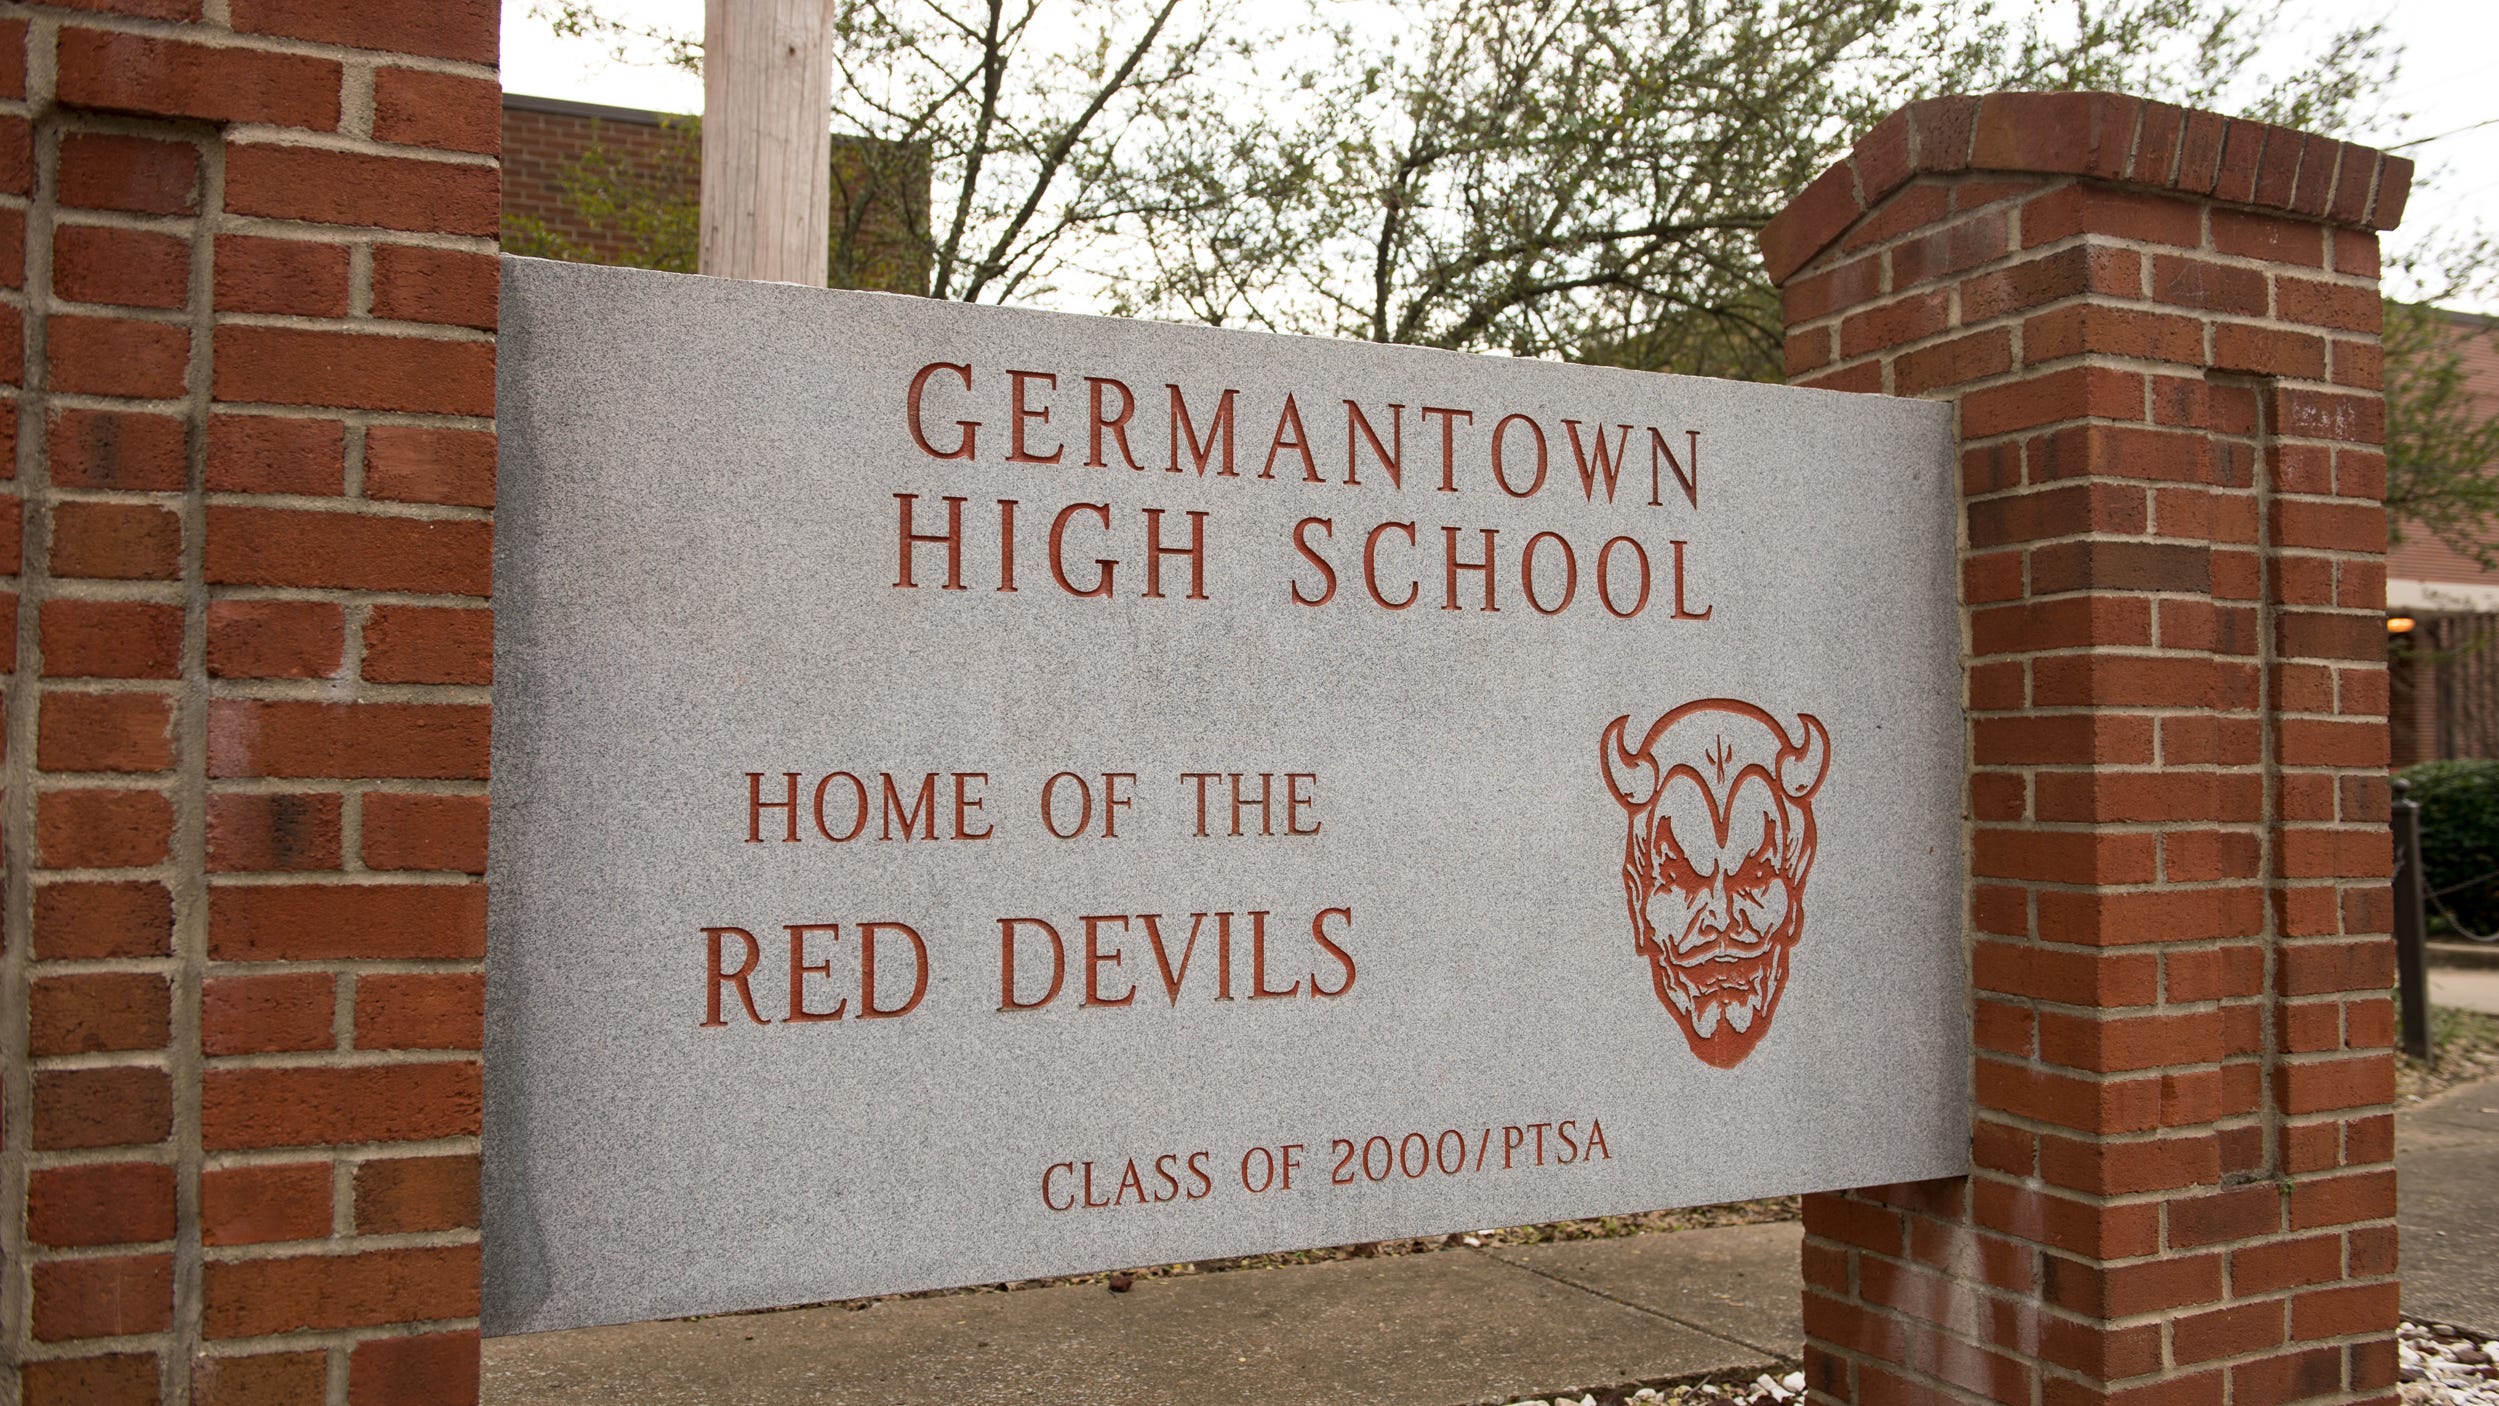 Three SCS schools in Germantown could become municipal schools under